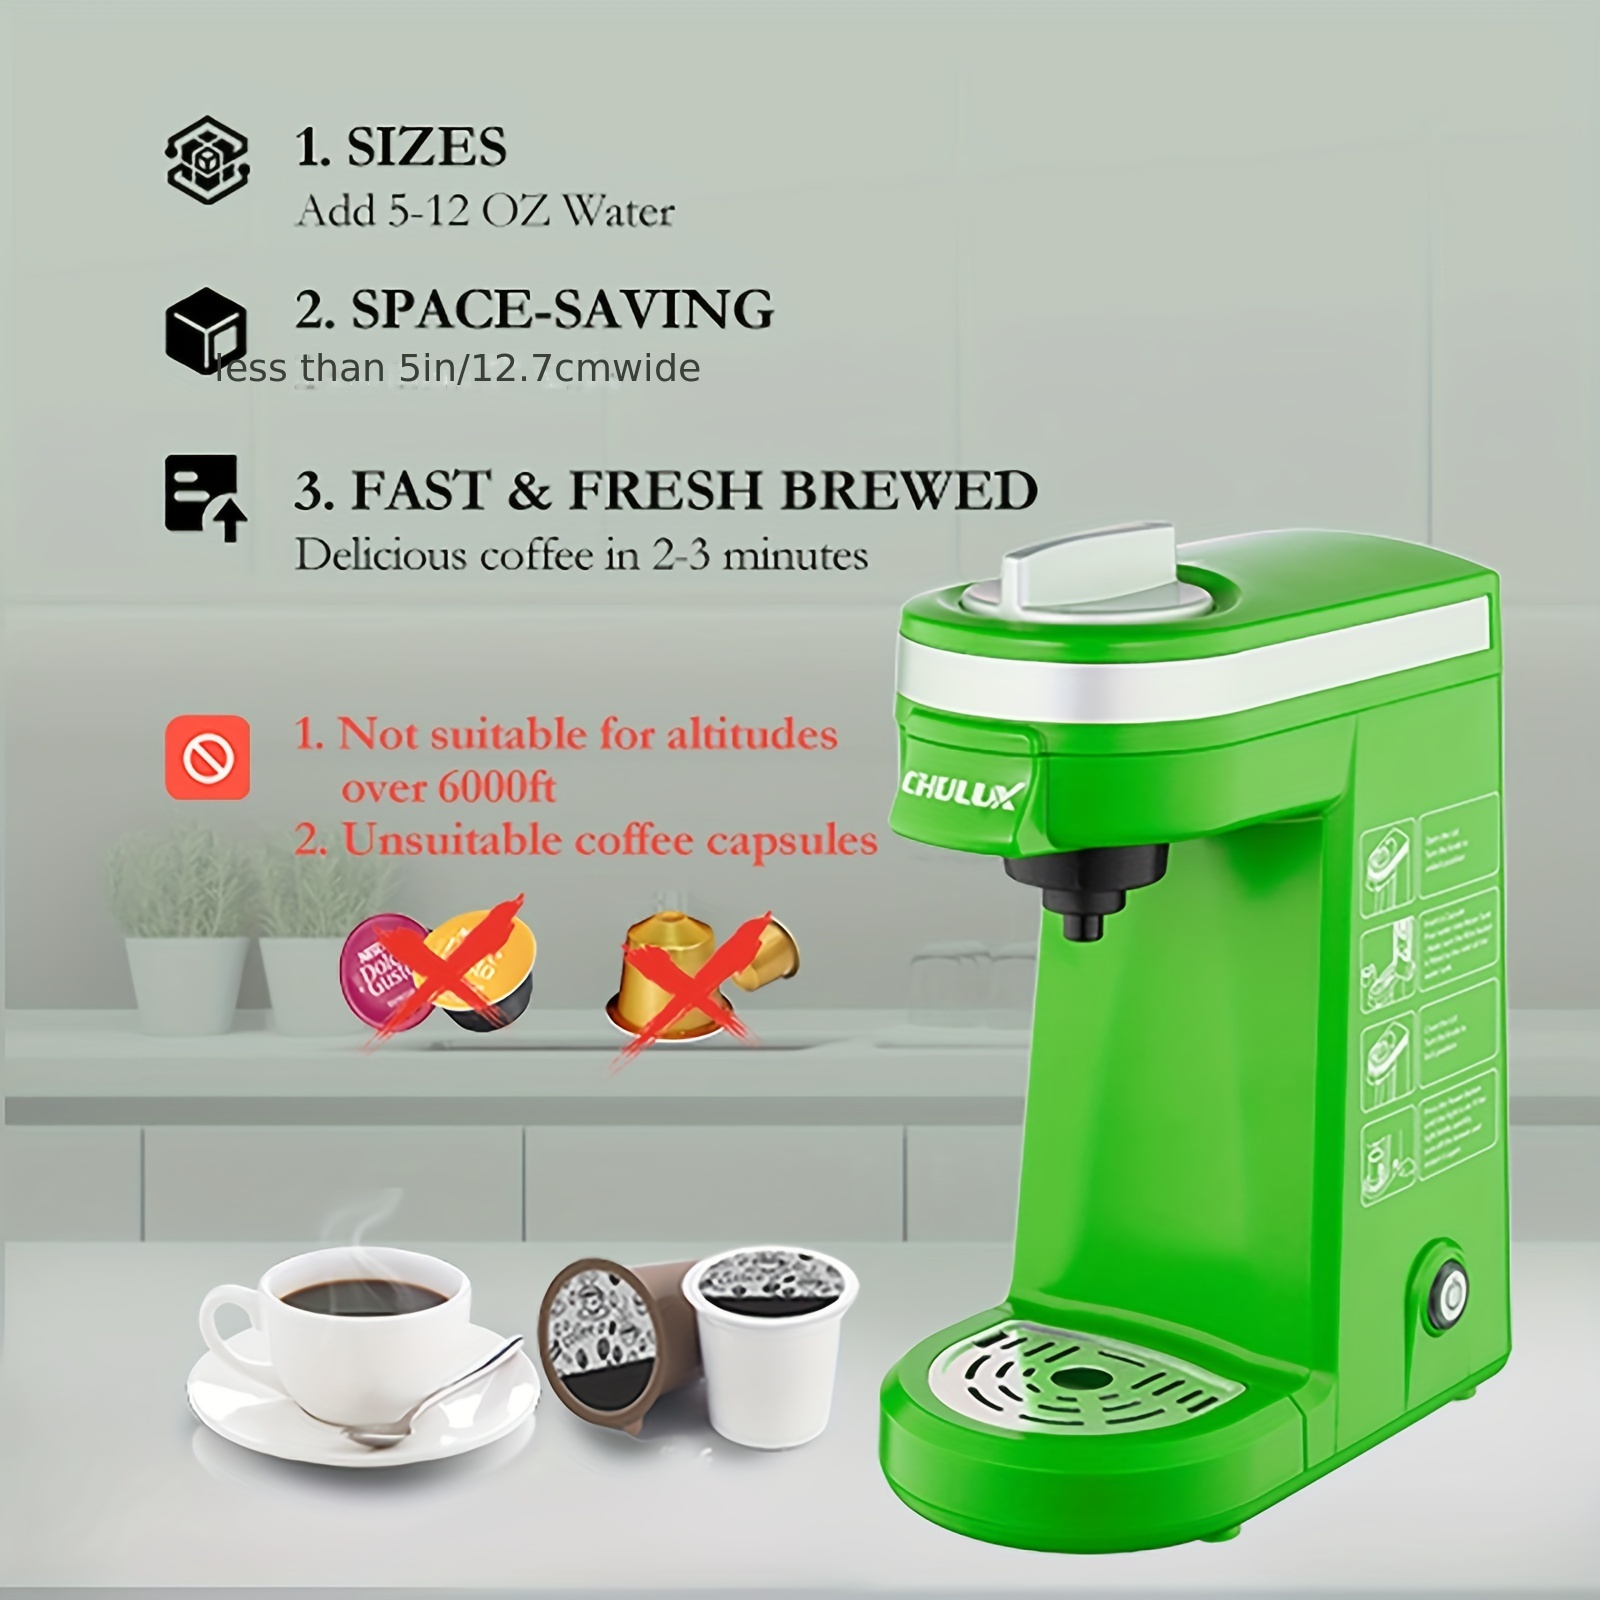 Chulux Coffee Maker Single-Serve Coffee Machine for Capsule,Orange